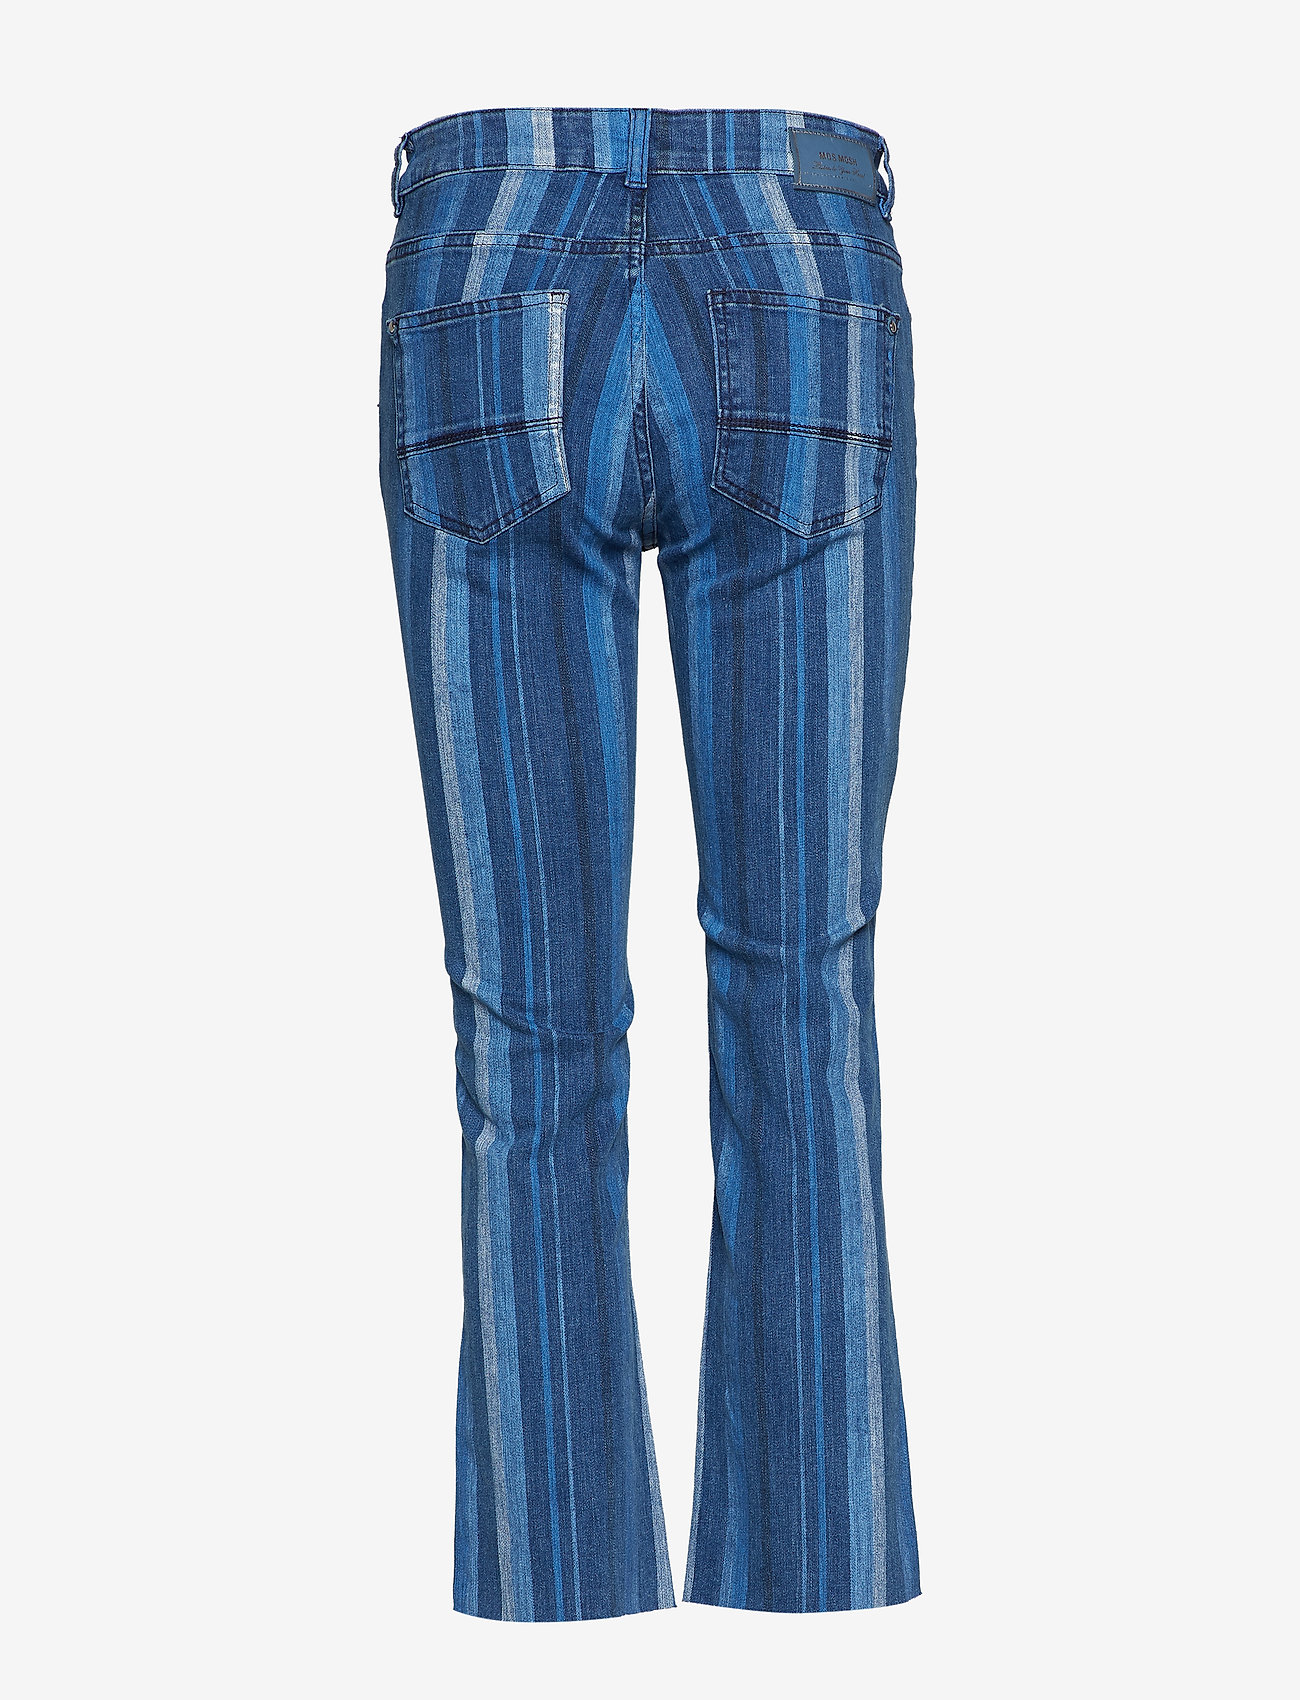 MOS MOSH Simone Stripe Jeans - Jeans | Boozt.com